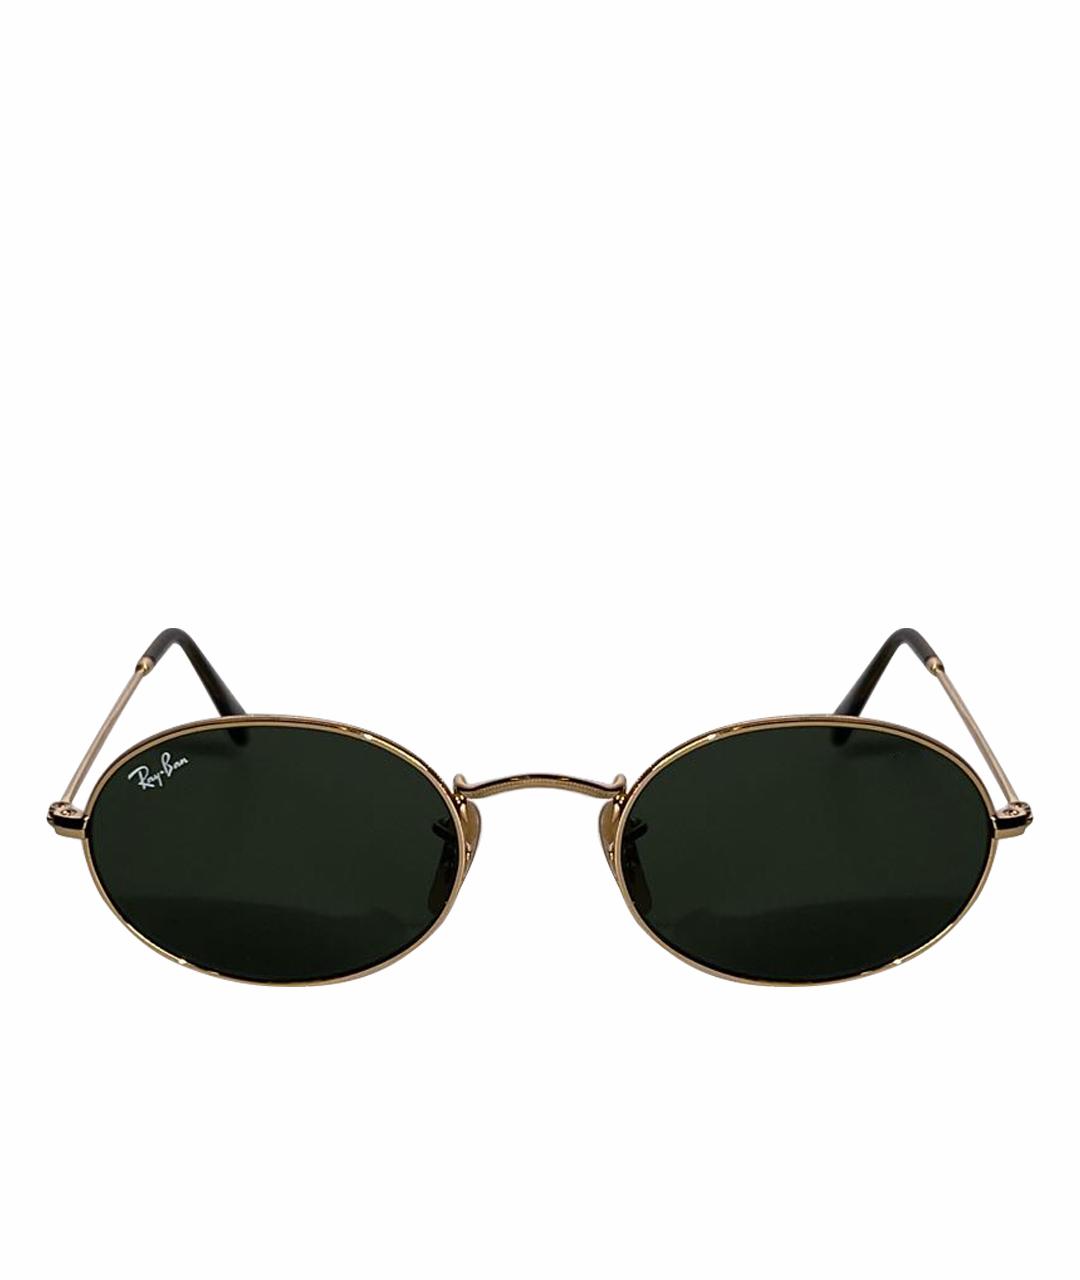 RAY BAN Золотые солнцезащитные очки, фото 1